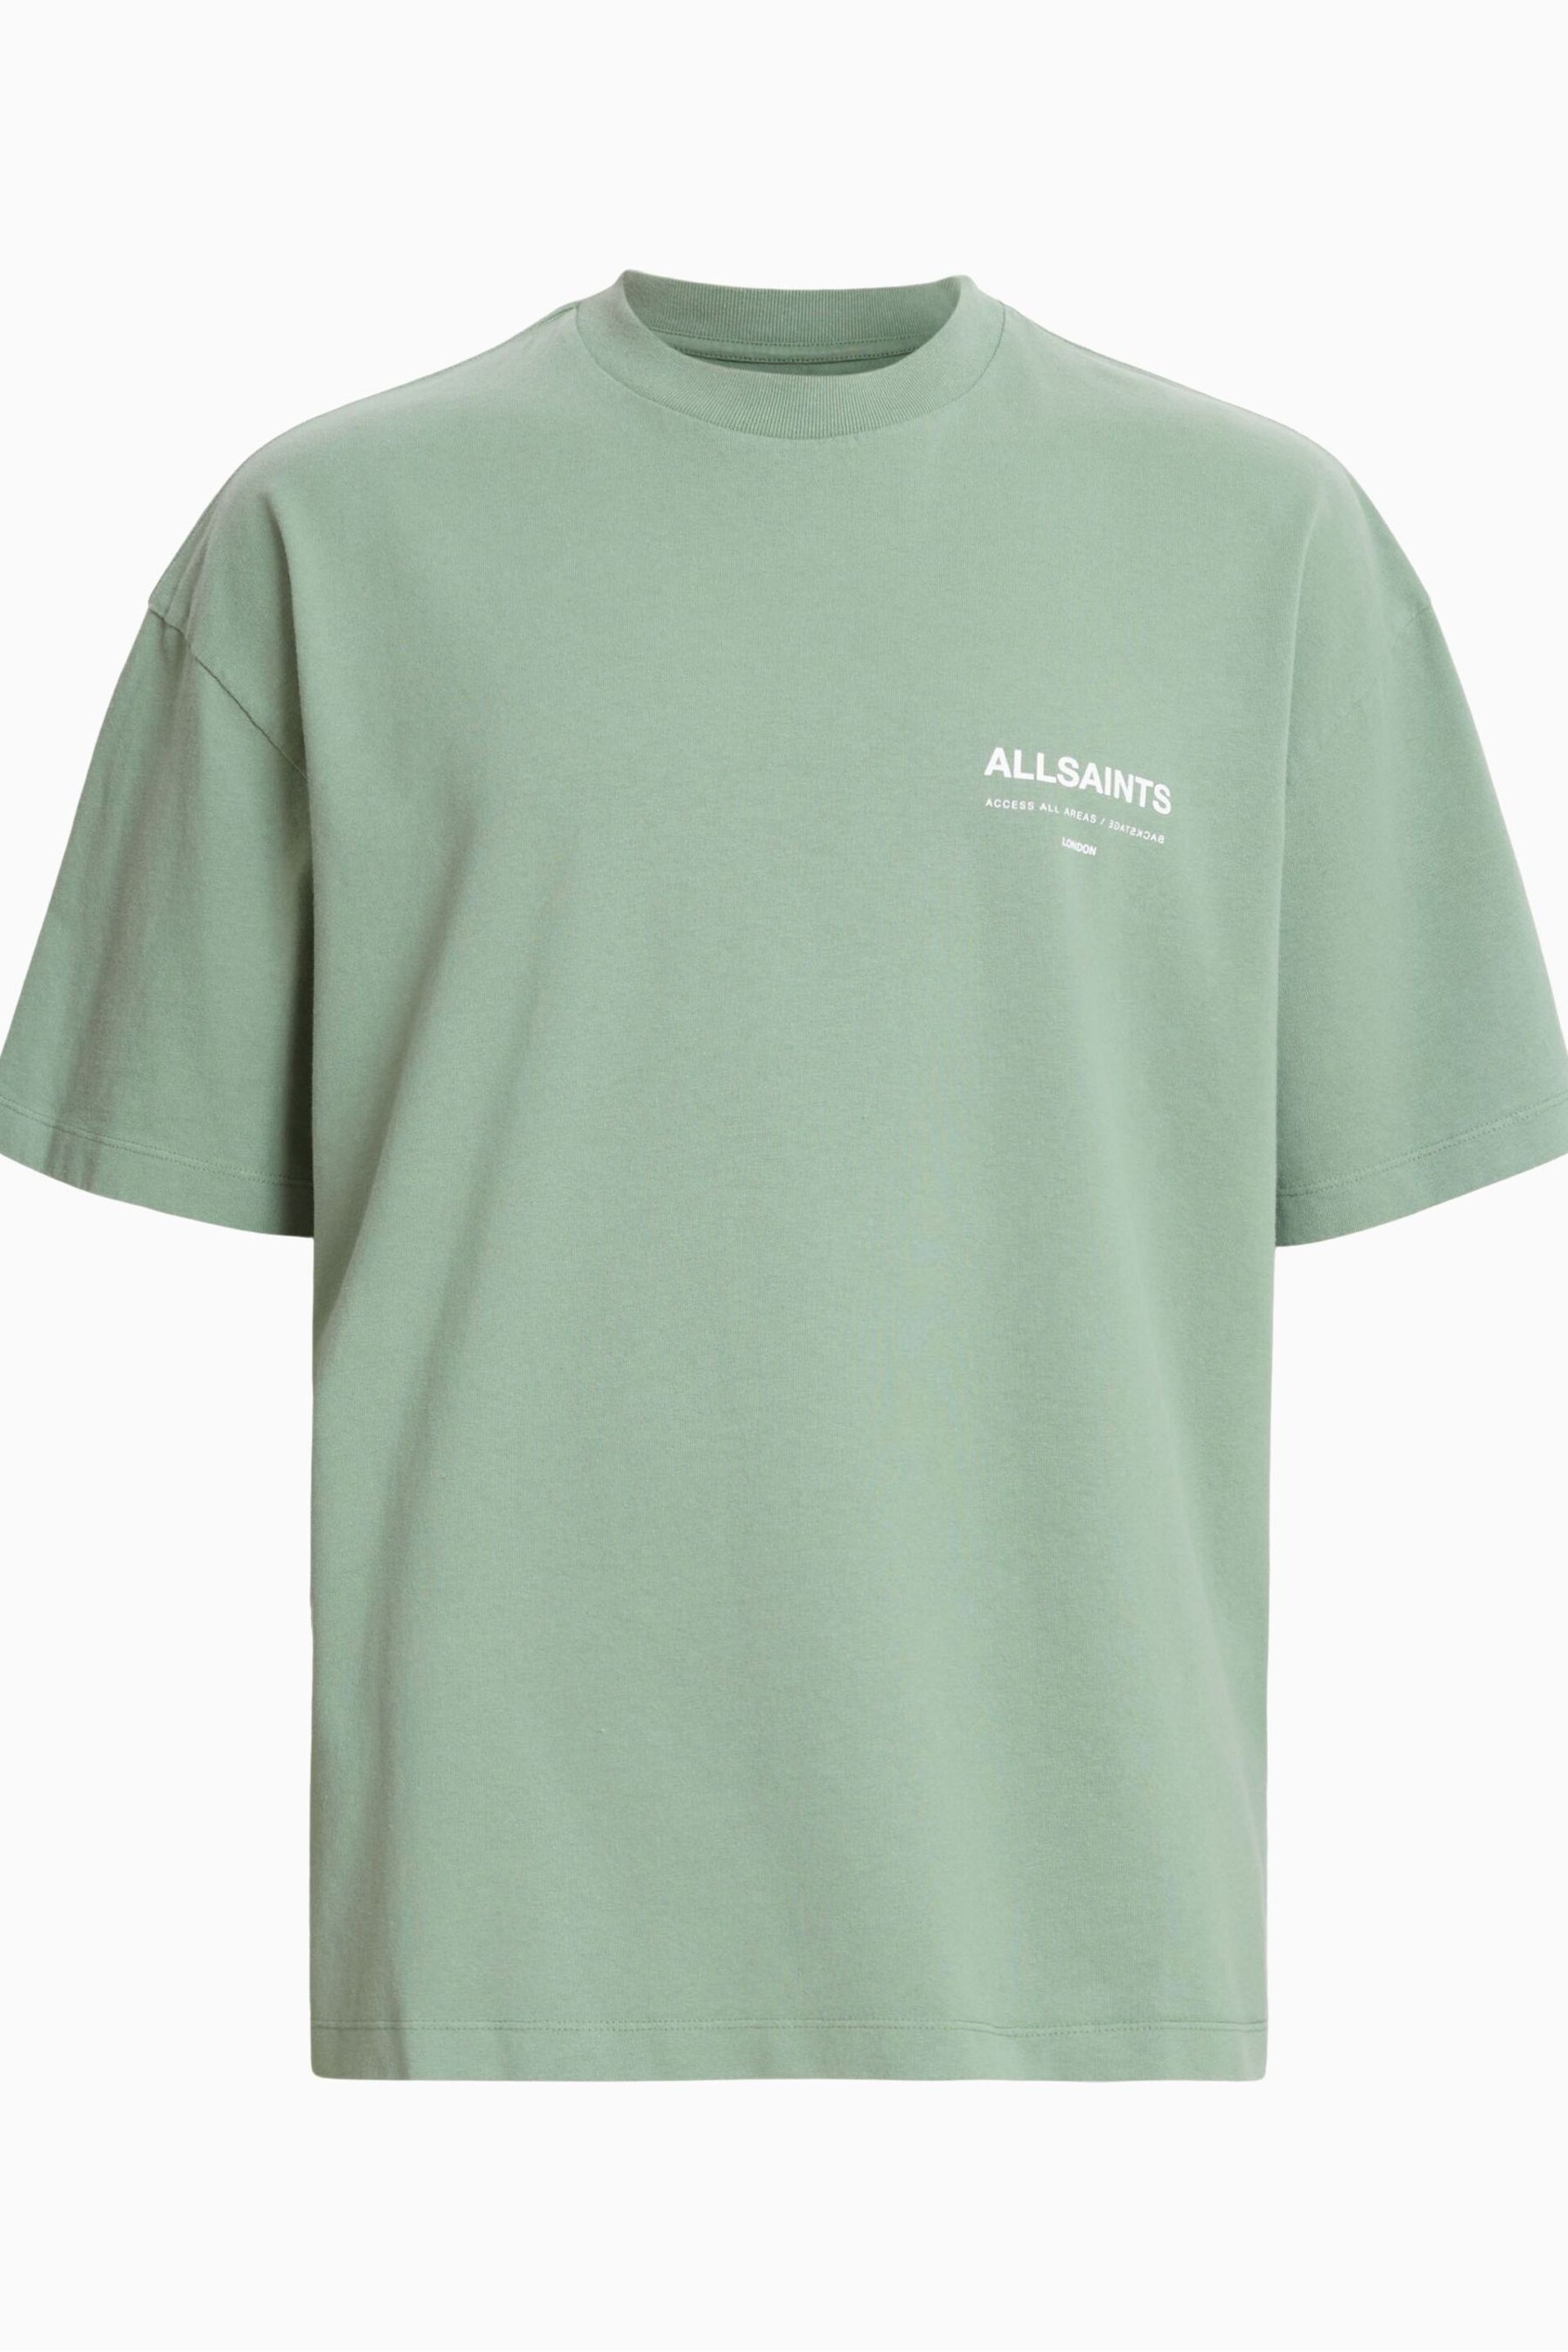 AllSaints Green Access Short Sleeve Crew T-Shirt - Image 7 of 7